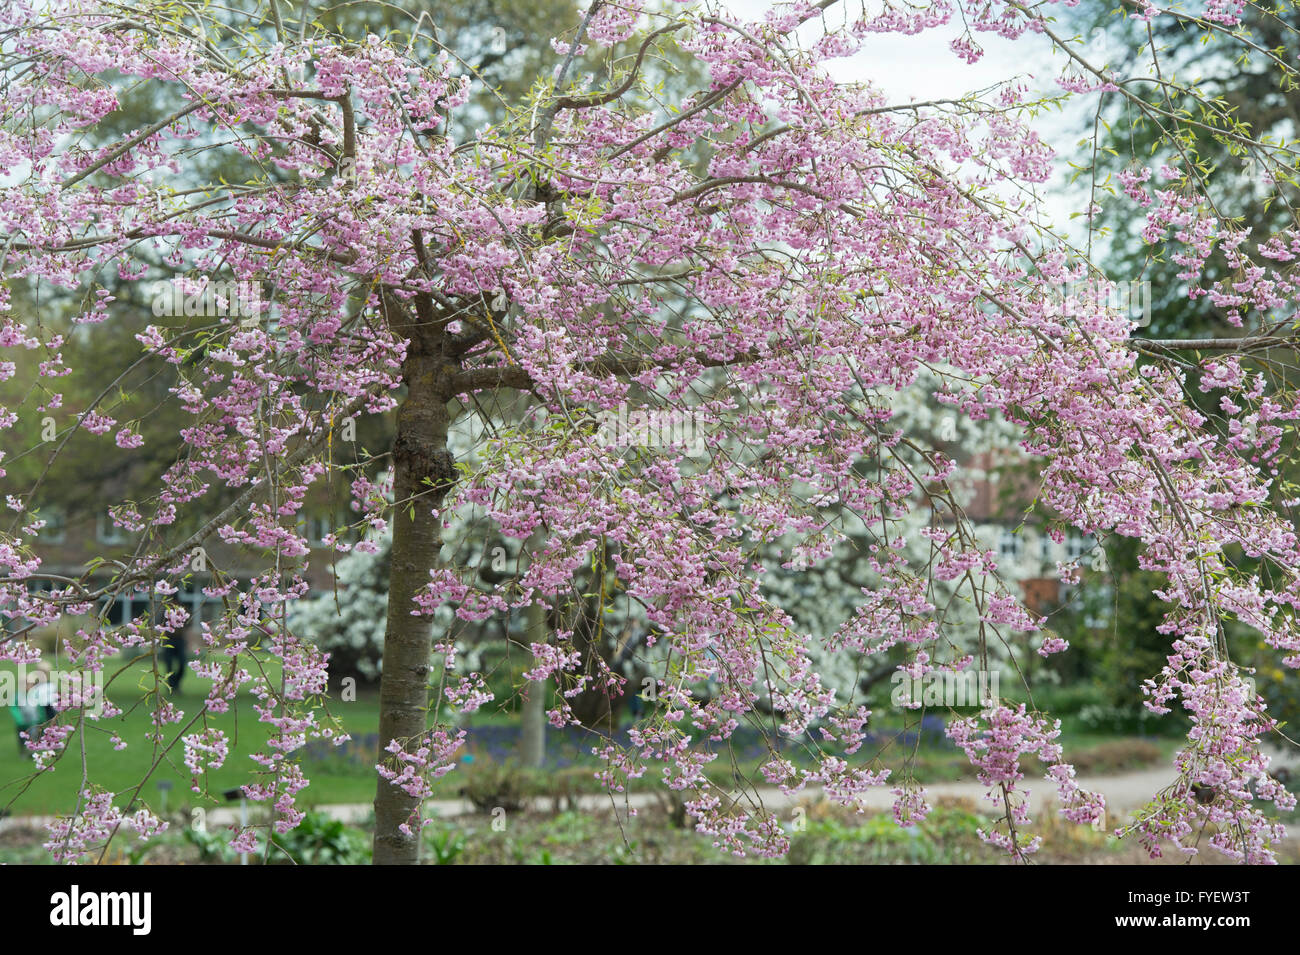 Prunus Subhirtella Pendula Plena Rosea. Weeping cherry tree with blossom at RHS Wisley gardens, Surrey, England Stock Photo